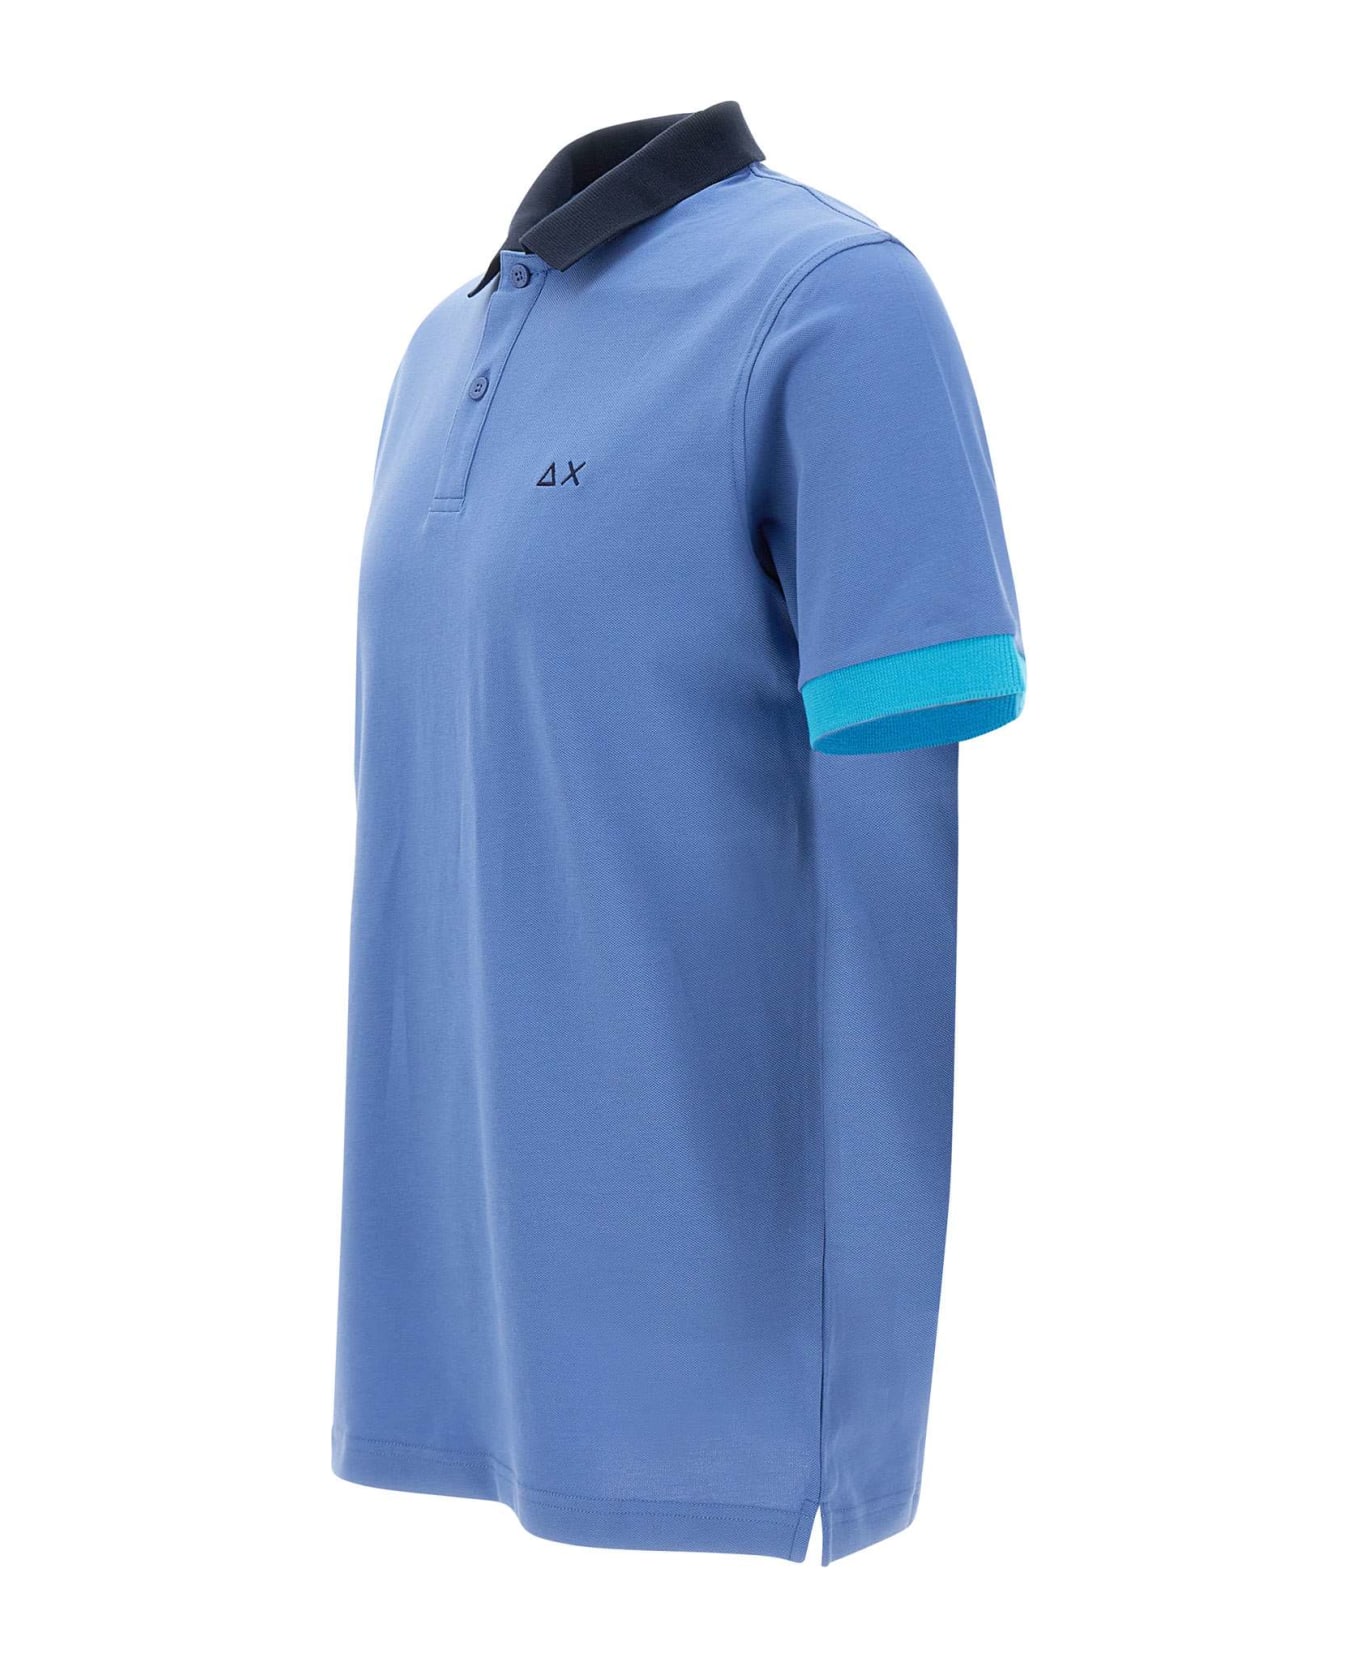 Sun 68 '3 Colours' Cotton Polo Shirt ポロシャツ